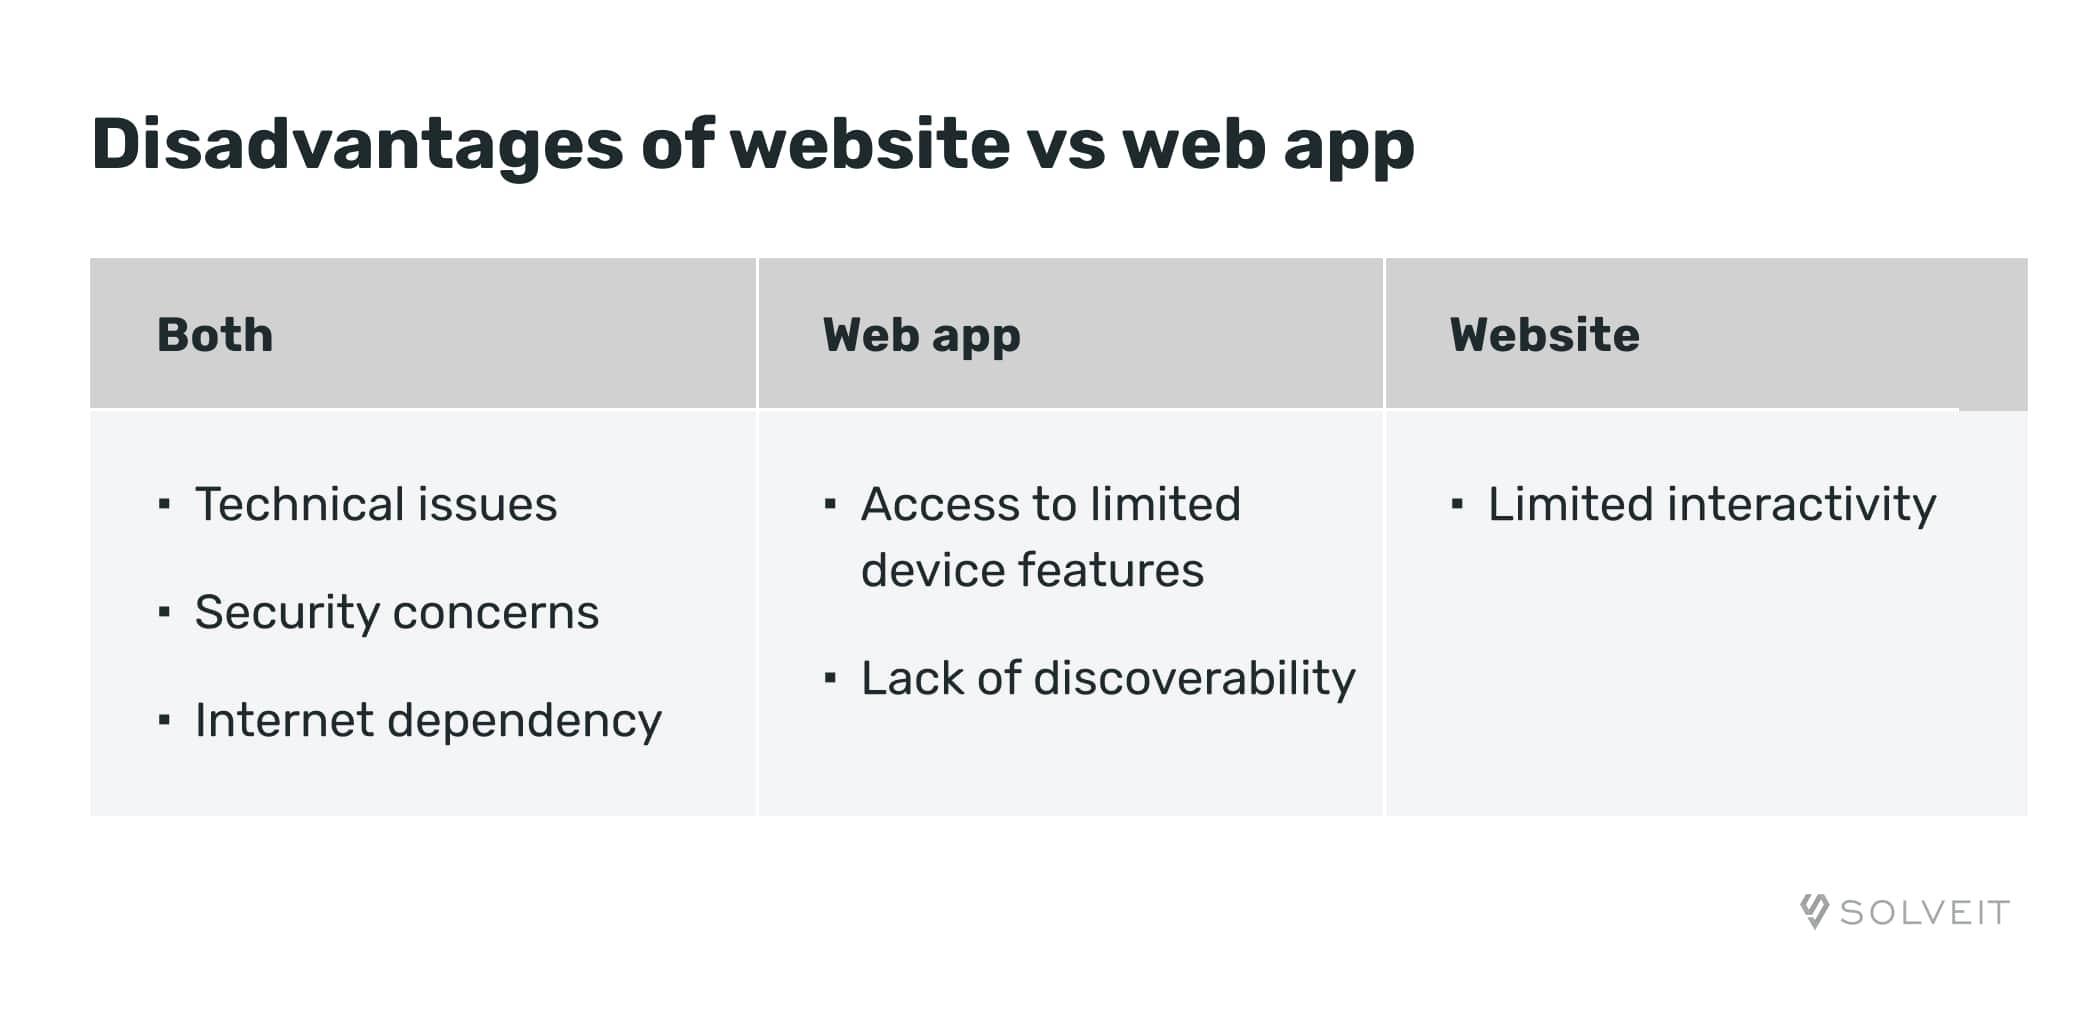 Disadvantages: website VS web app